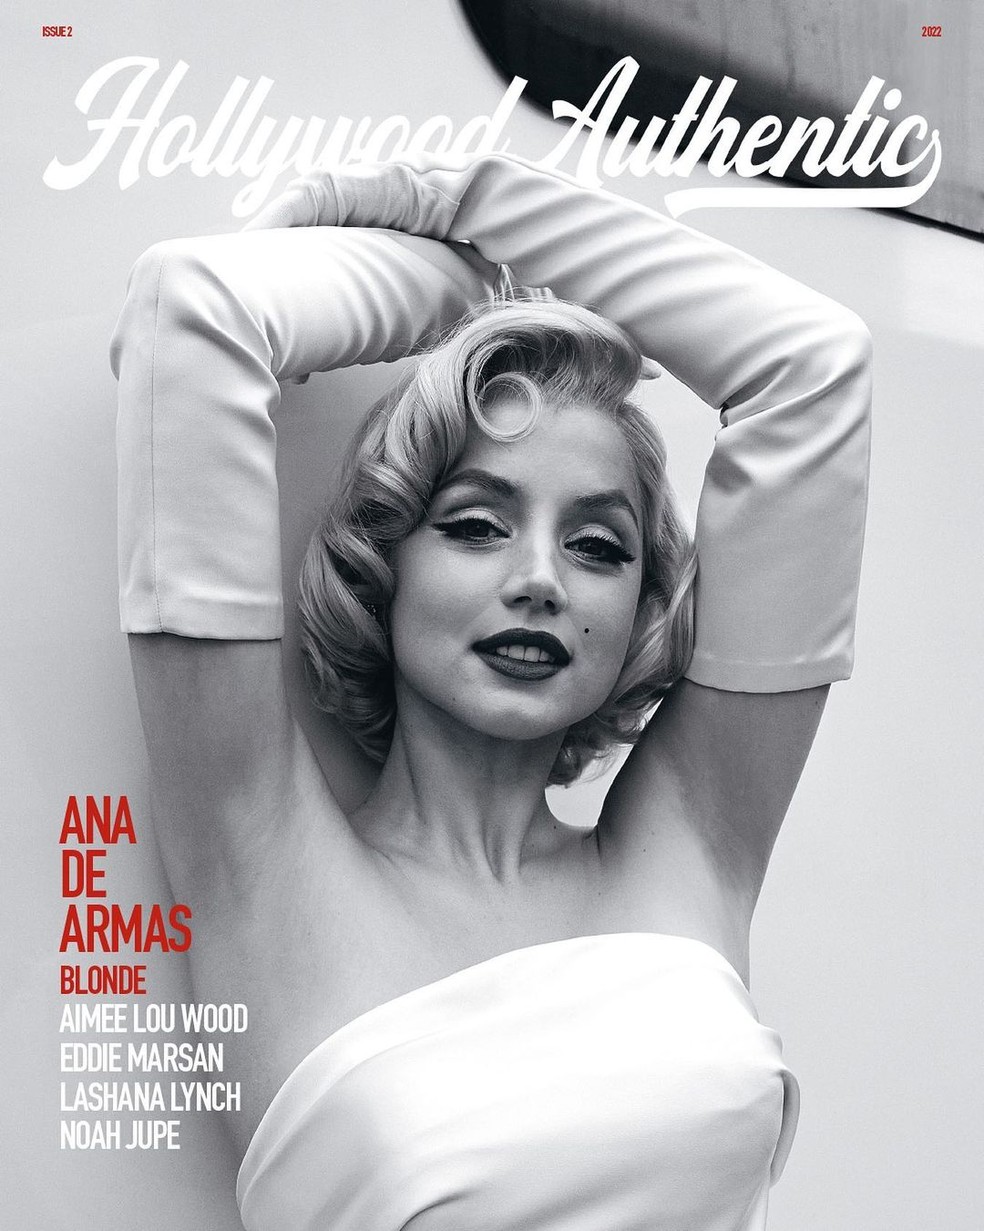 Marilyn Monroe: a influência atemporal do ícone dos anos 50 – Blog Bergerson